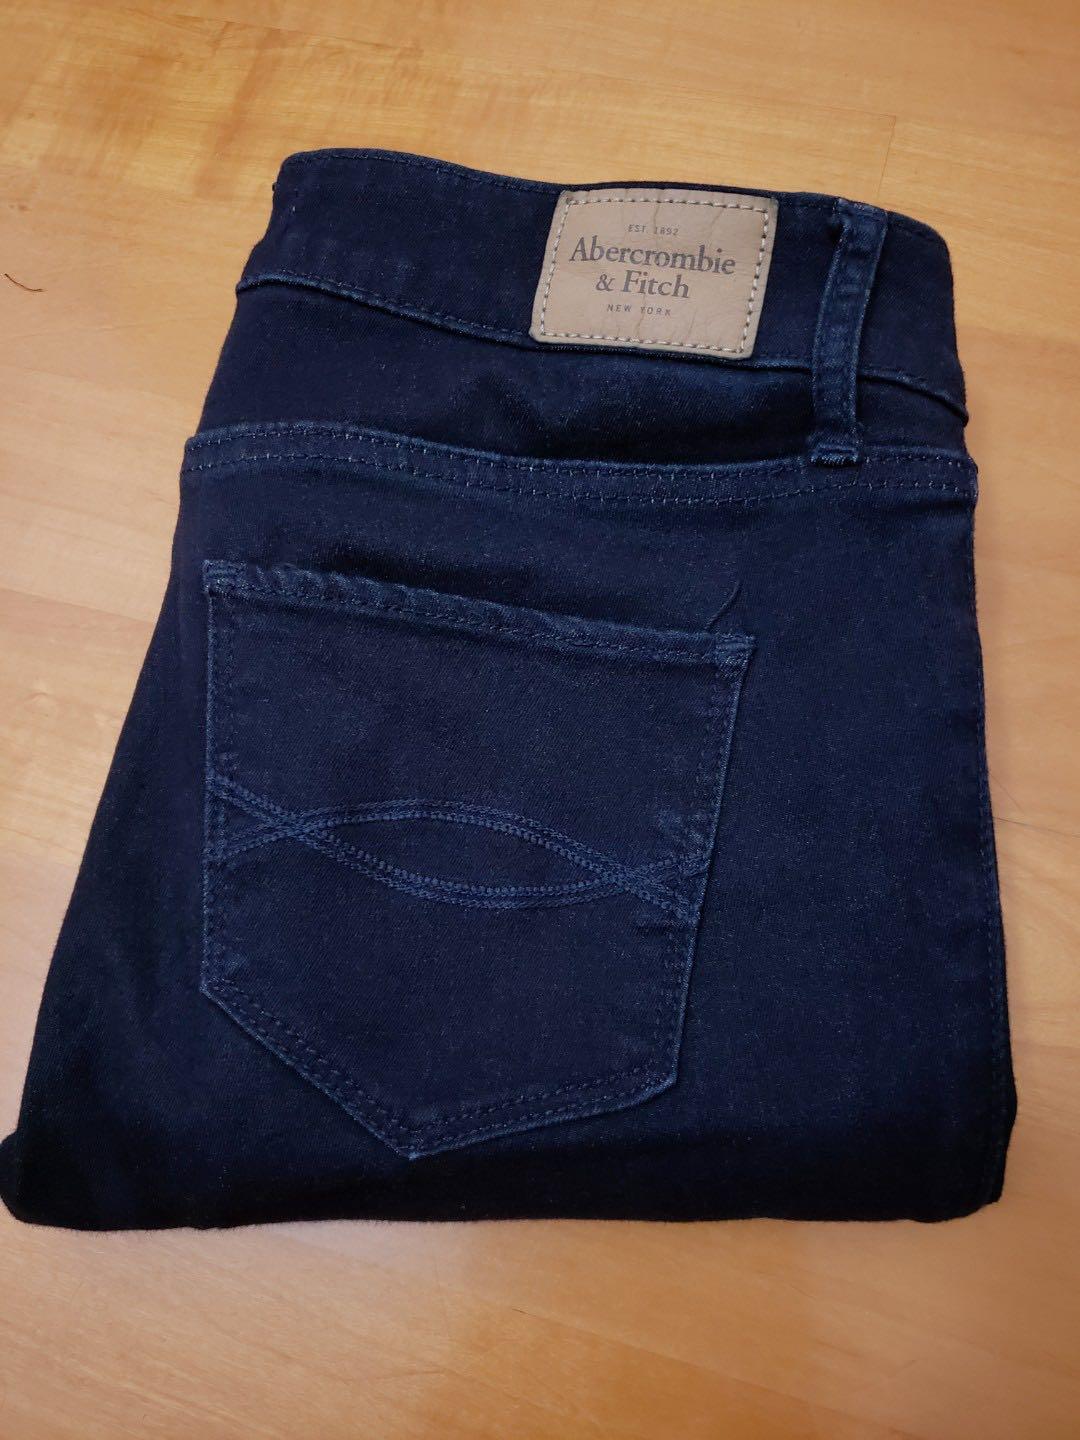 abercrombie & fitch skinny jeans